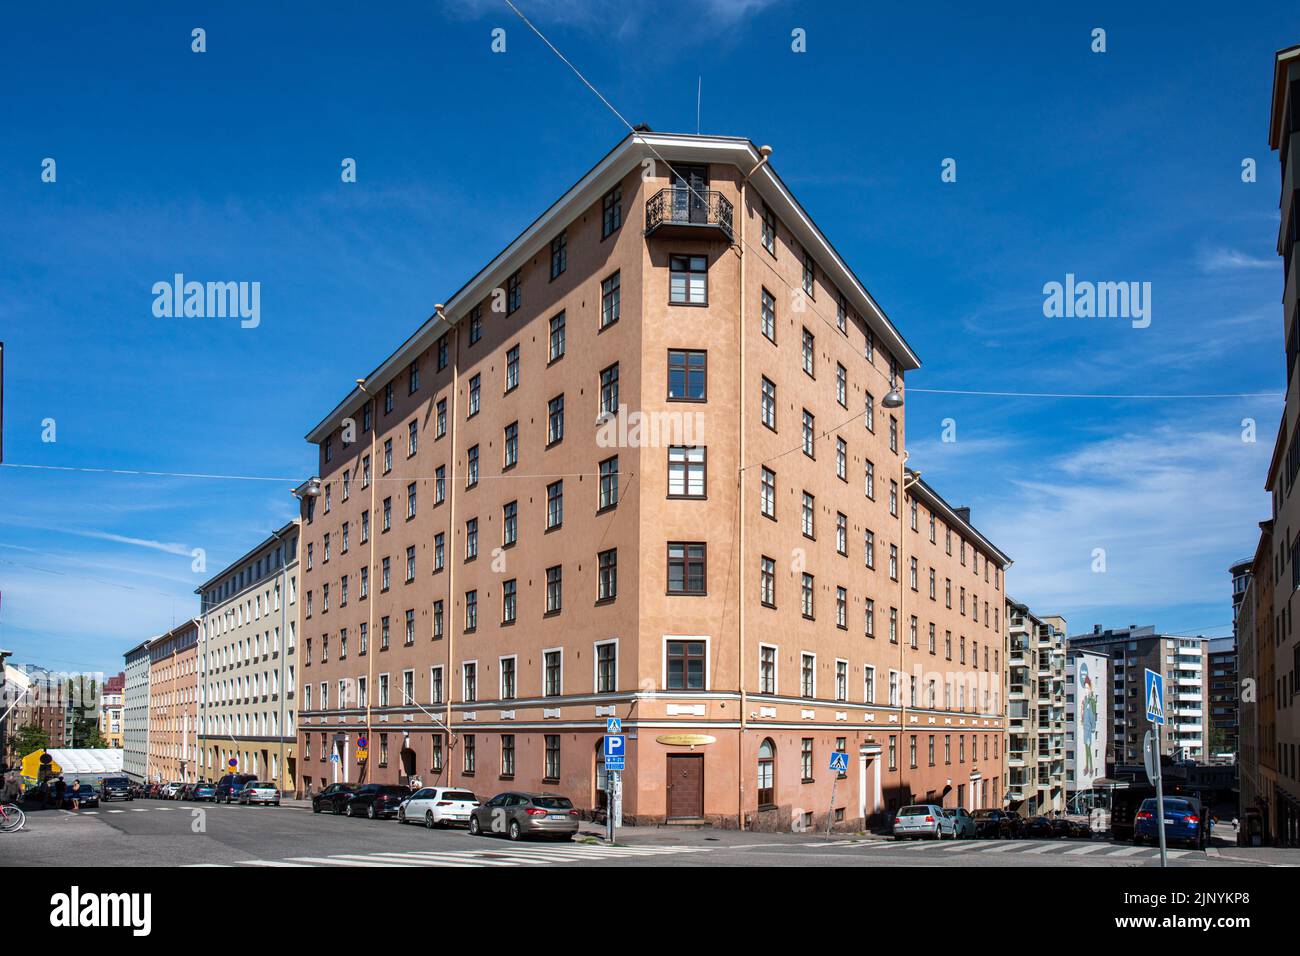 Residential building in the corner Pengerkatu and Torkkelinkatu in Kallio district of Helsinki, Finland Stock Photo